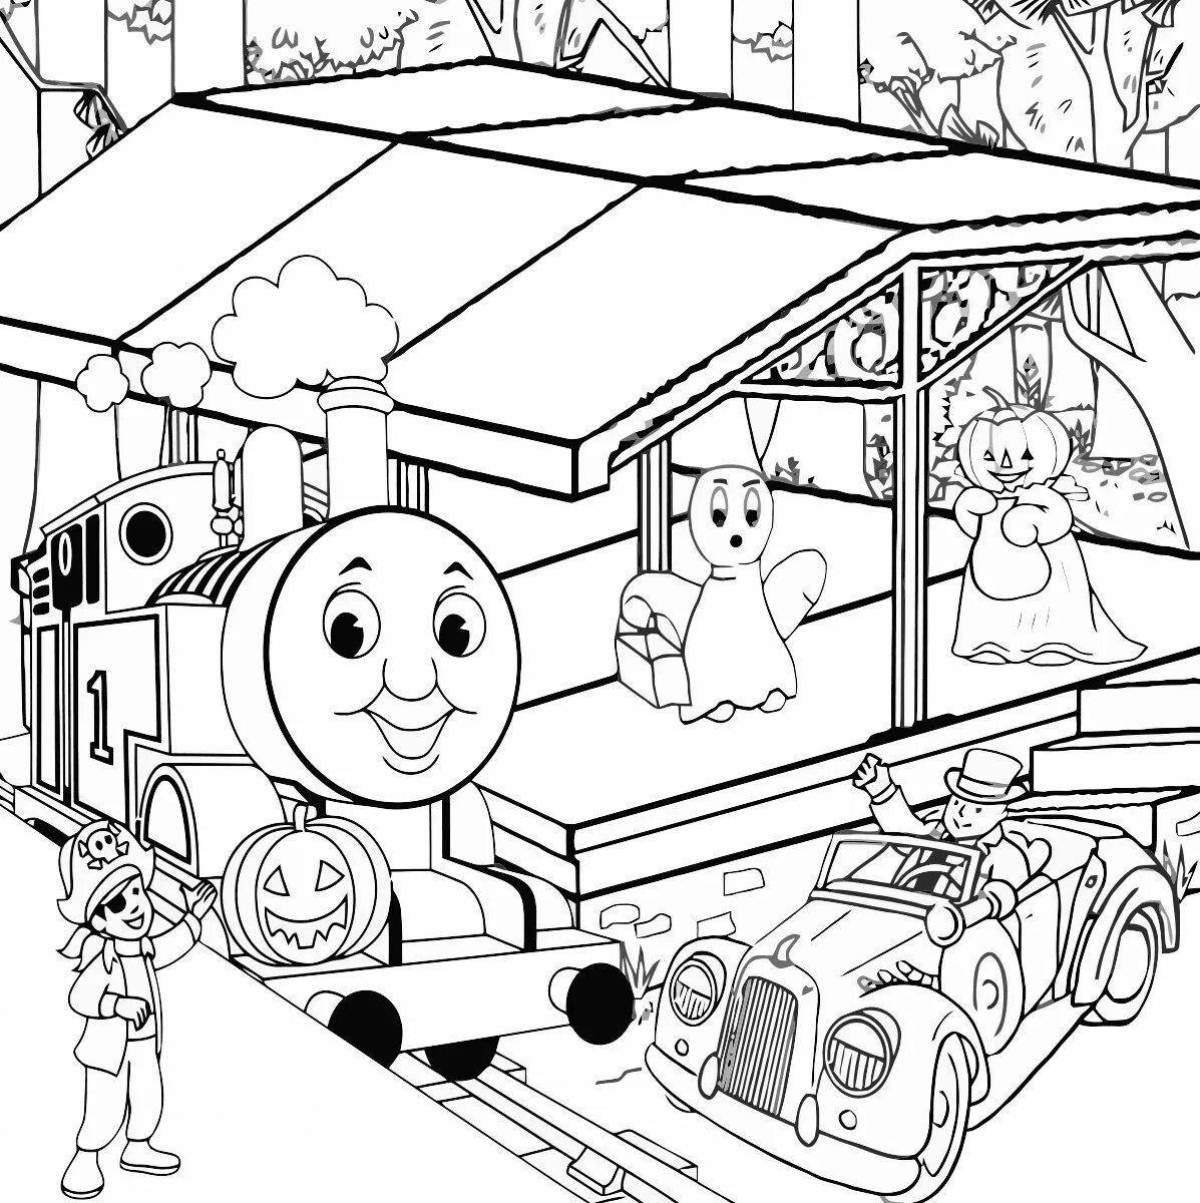 Thomas' creative train coloring book